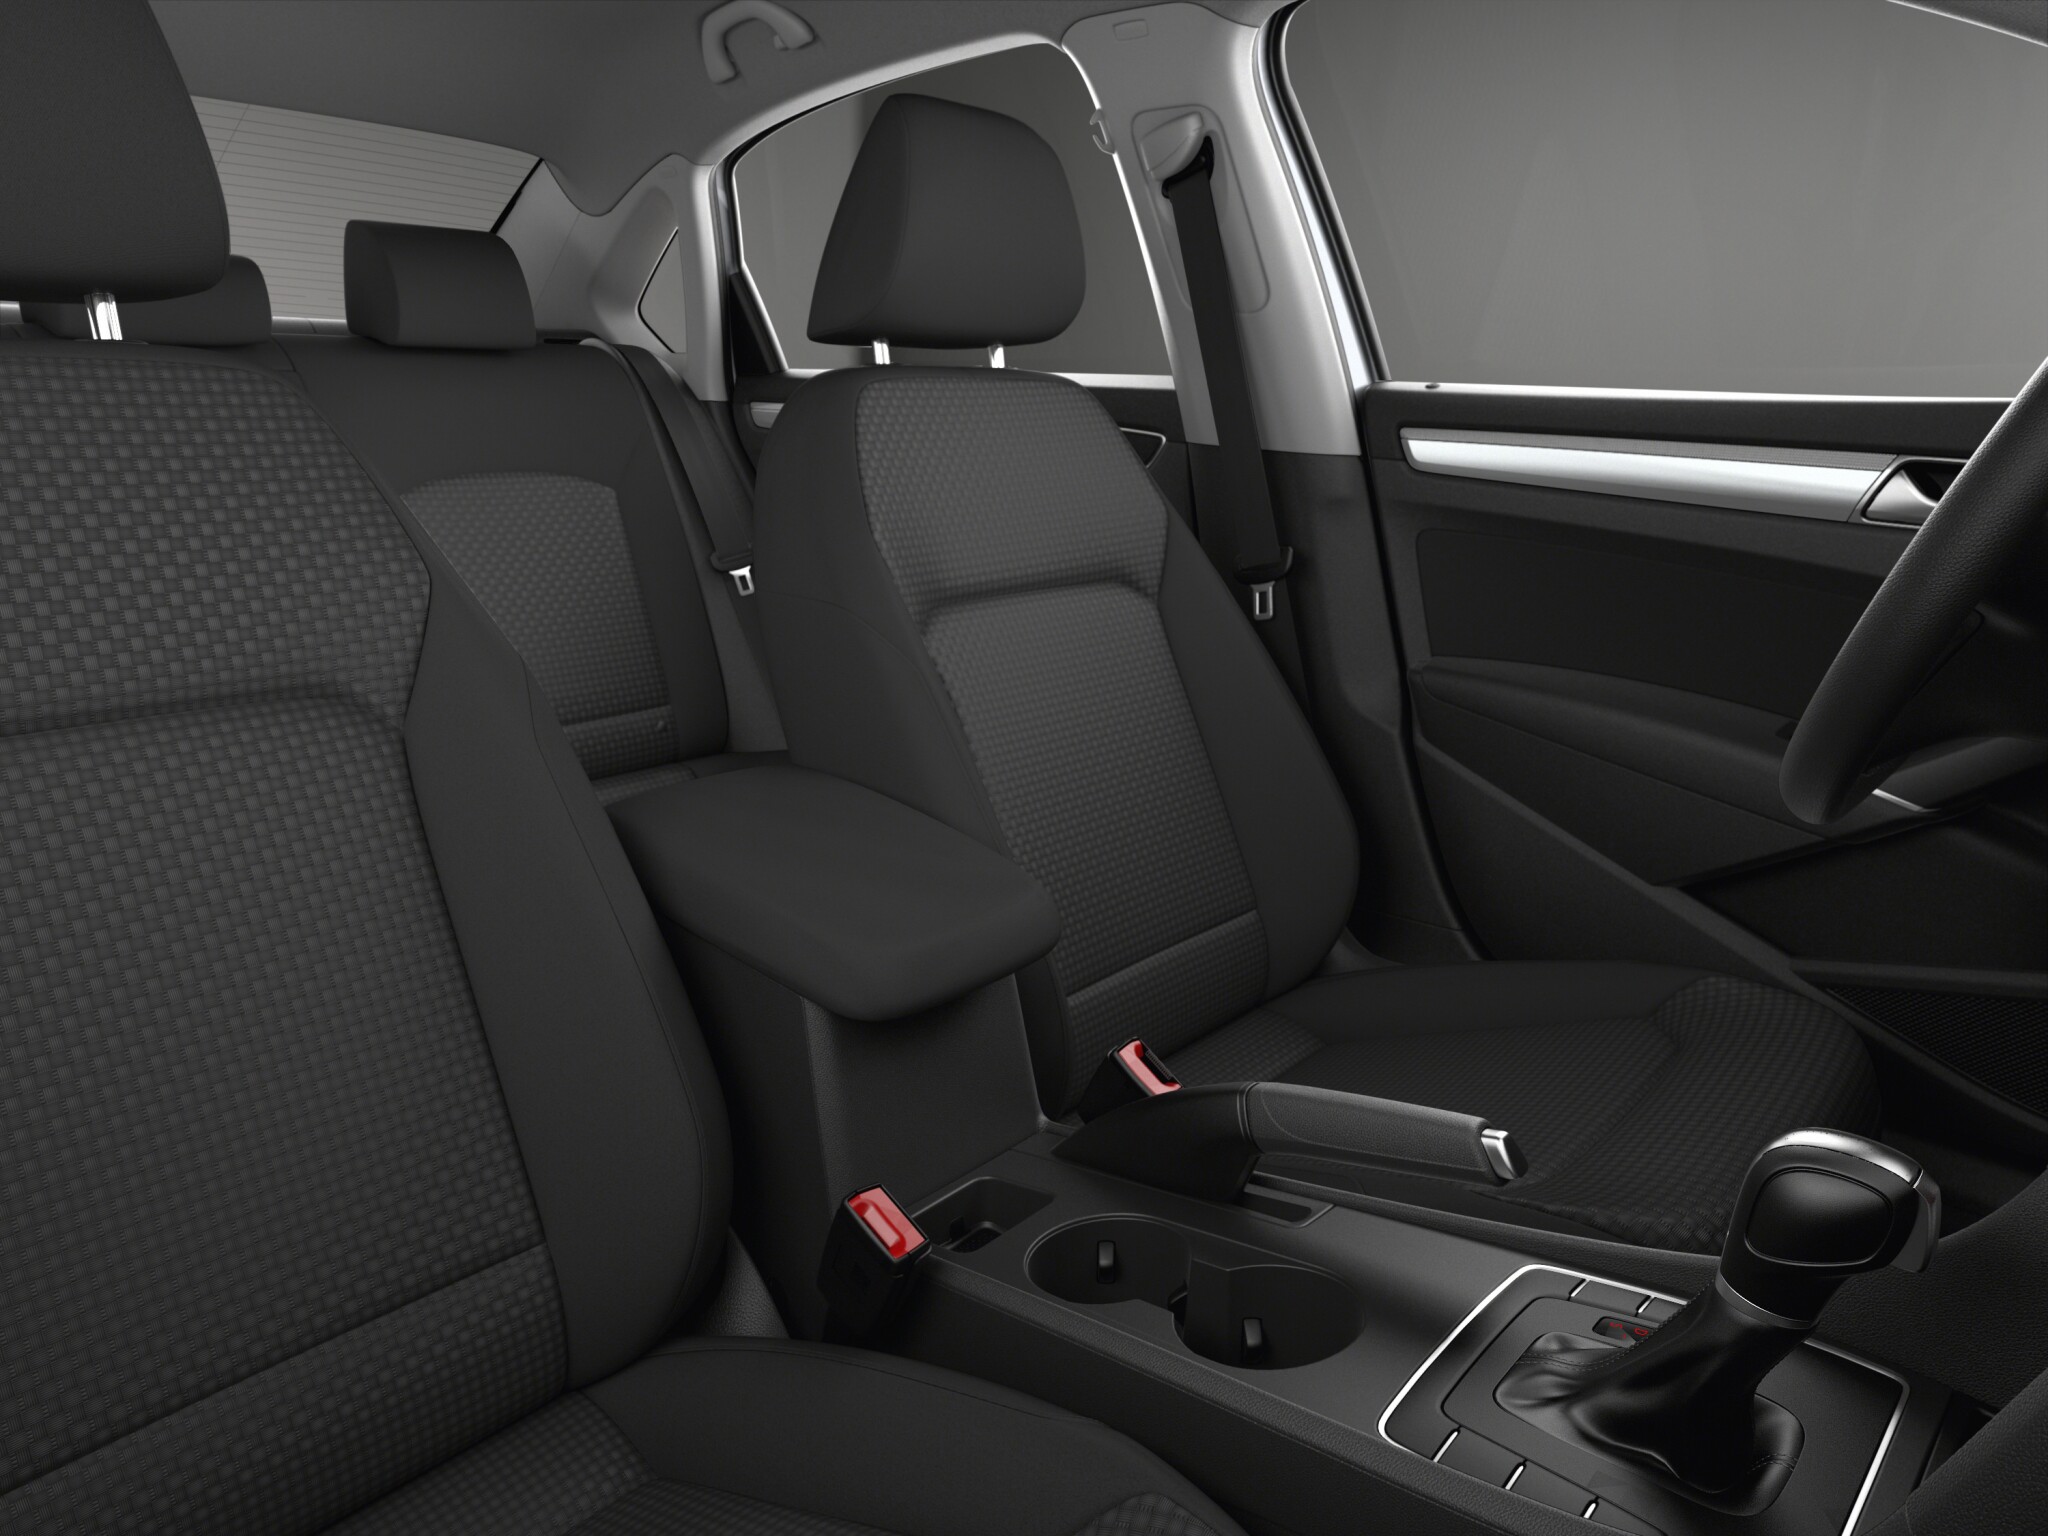 Volkswagen Passat V6 SEL Premium interior front view